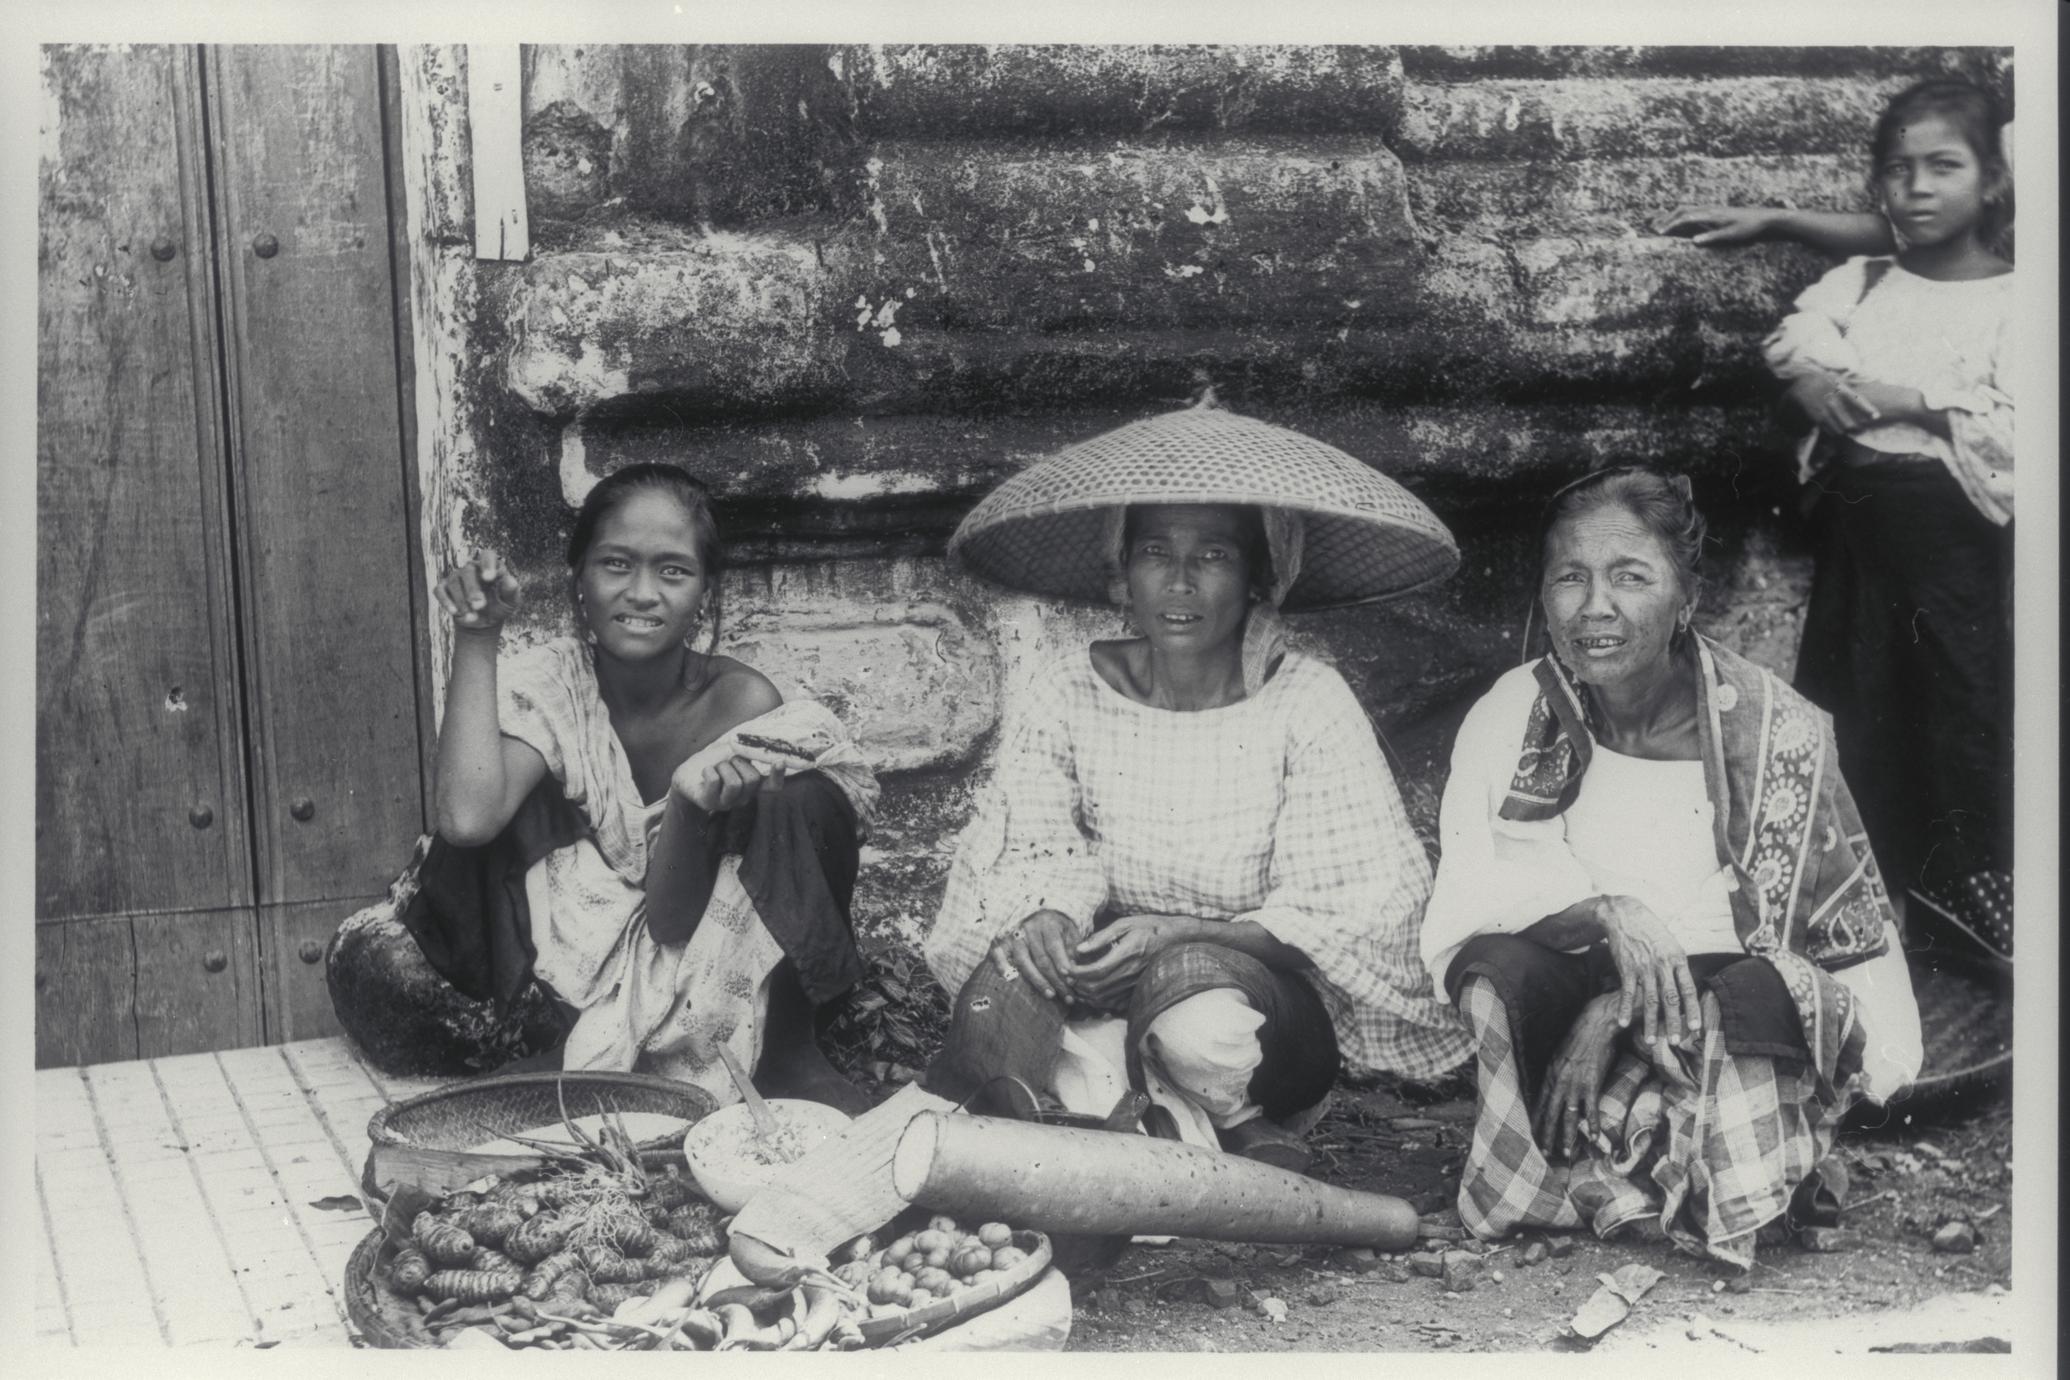 Female Filipino vendors, early 1900s